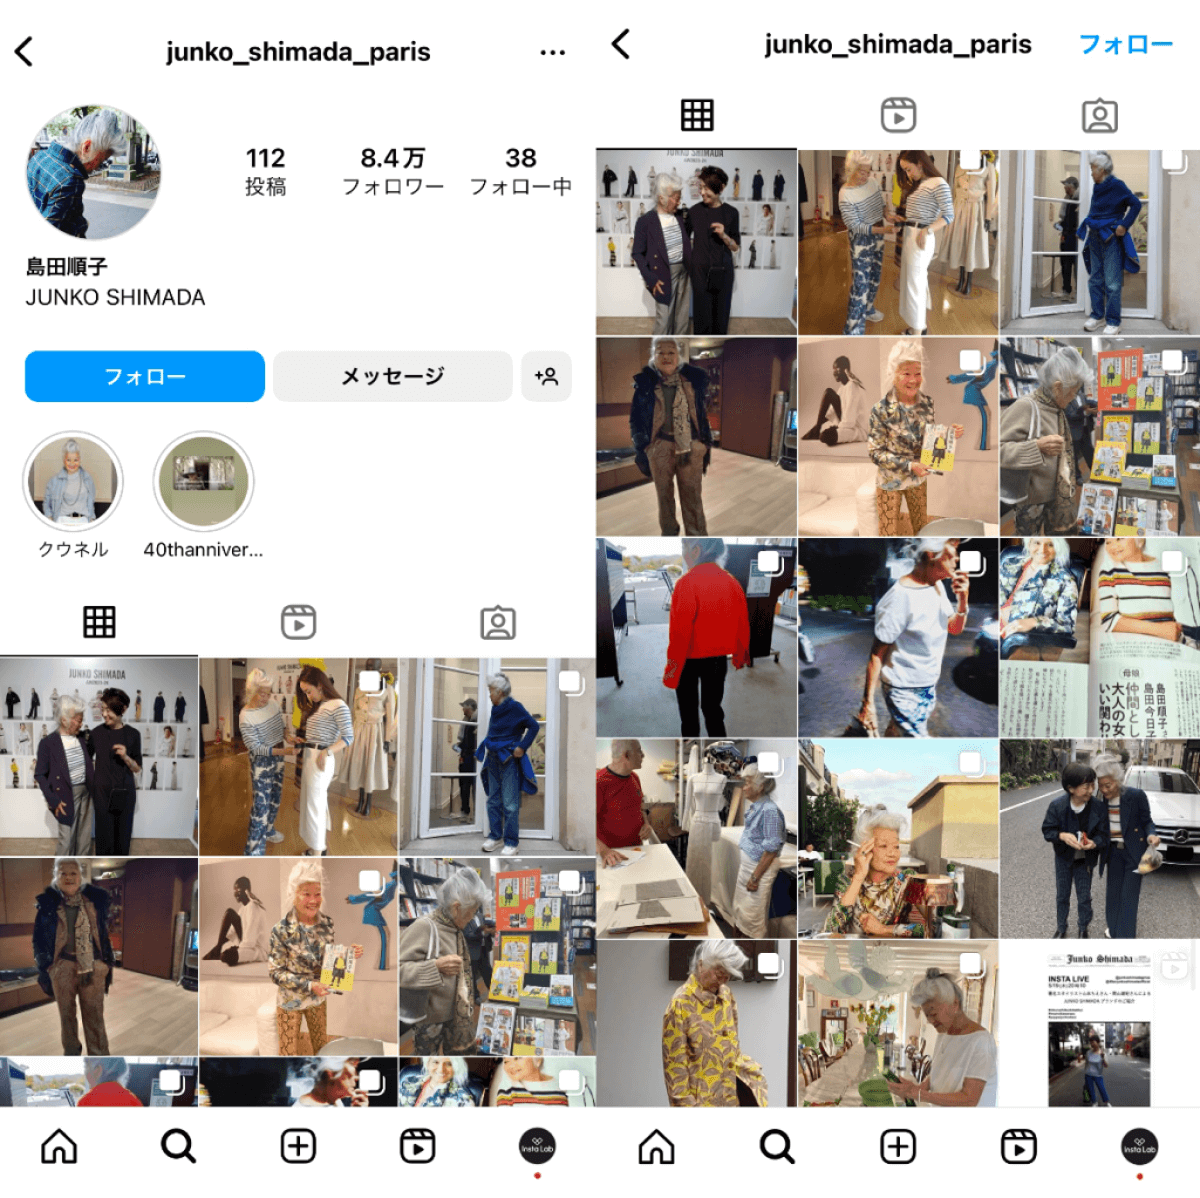 instagram-account-junko-shimada-paris